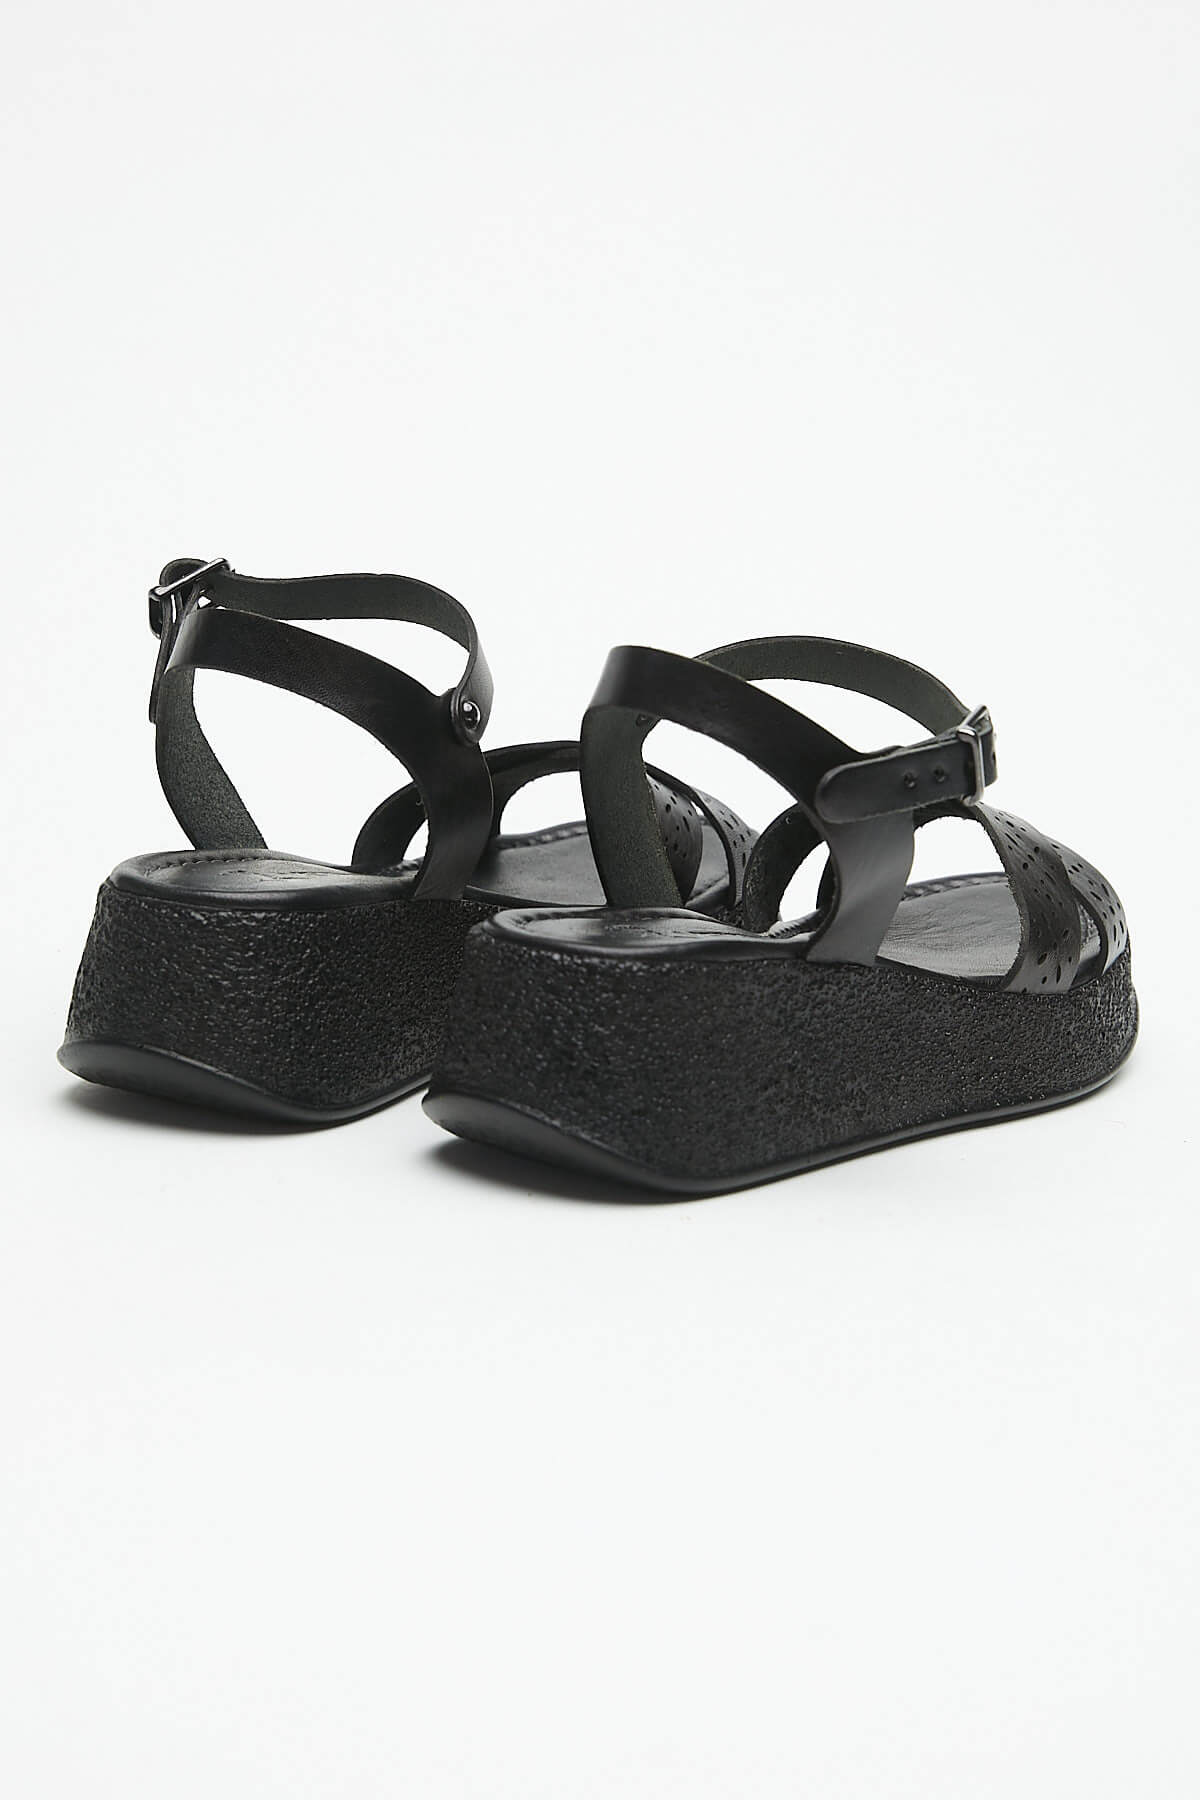 Kadın Deri Sandalet Siyah 21983201 - Thumbnail